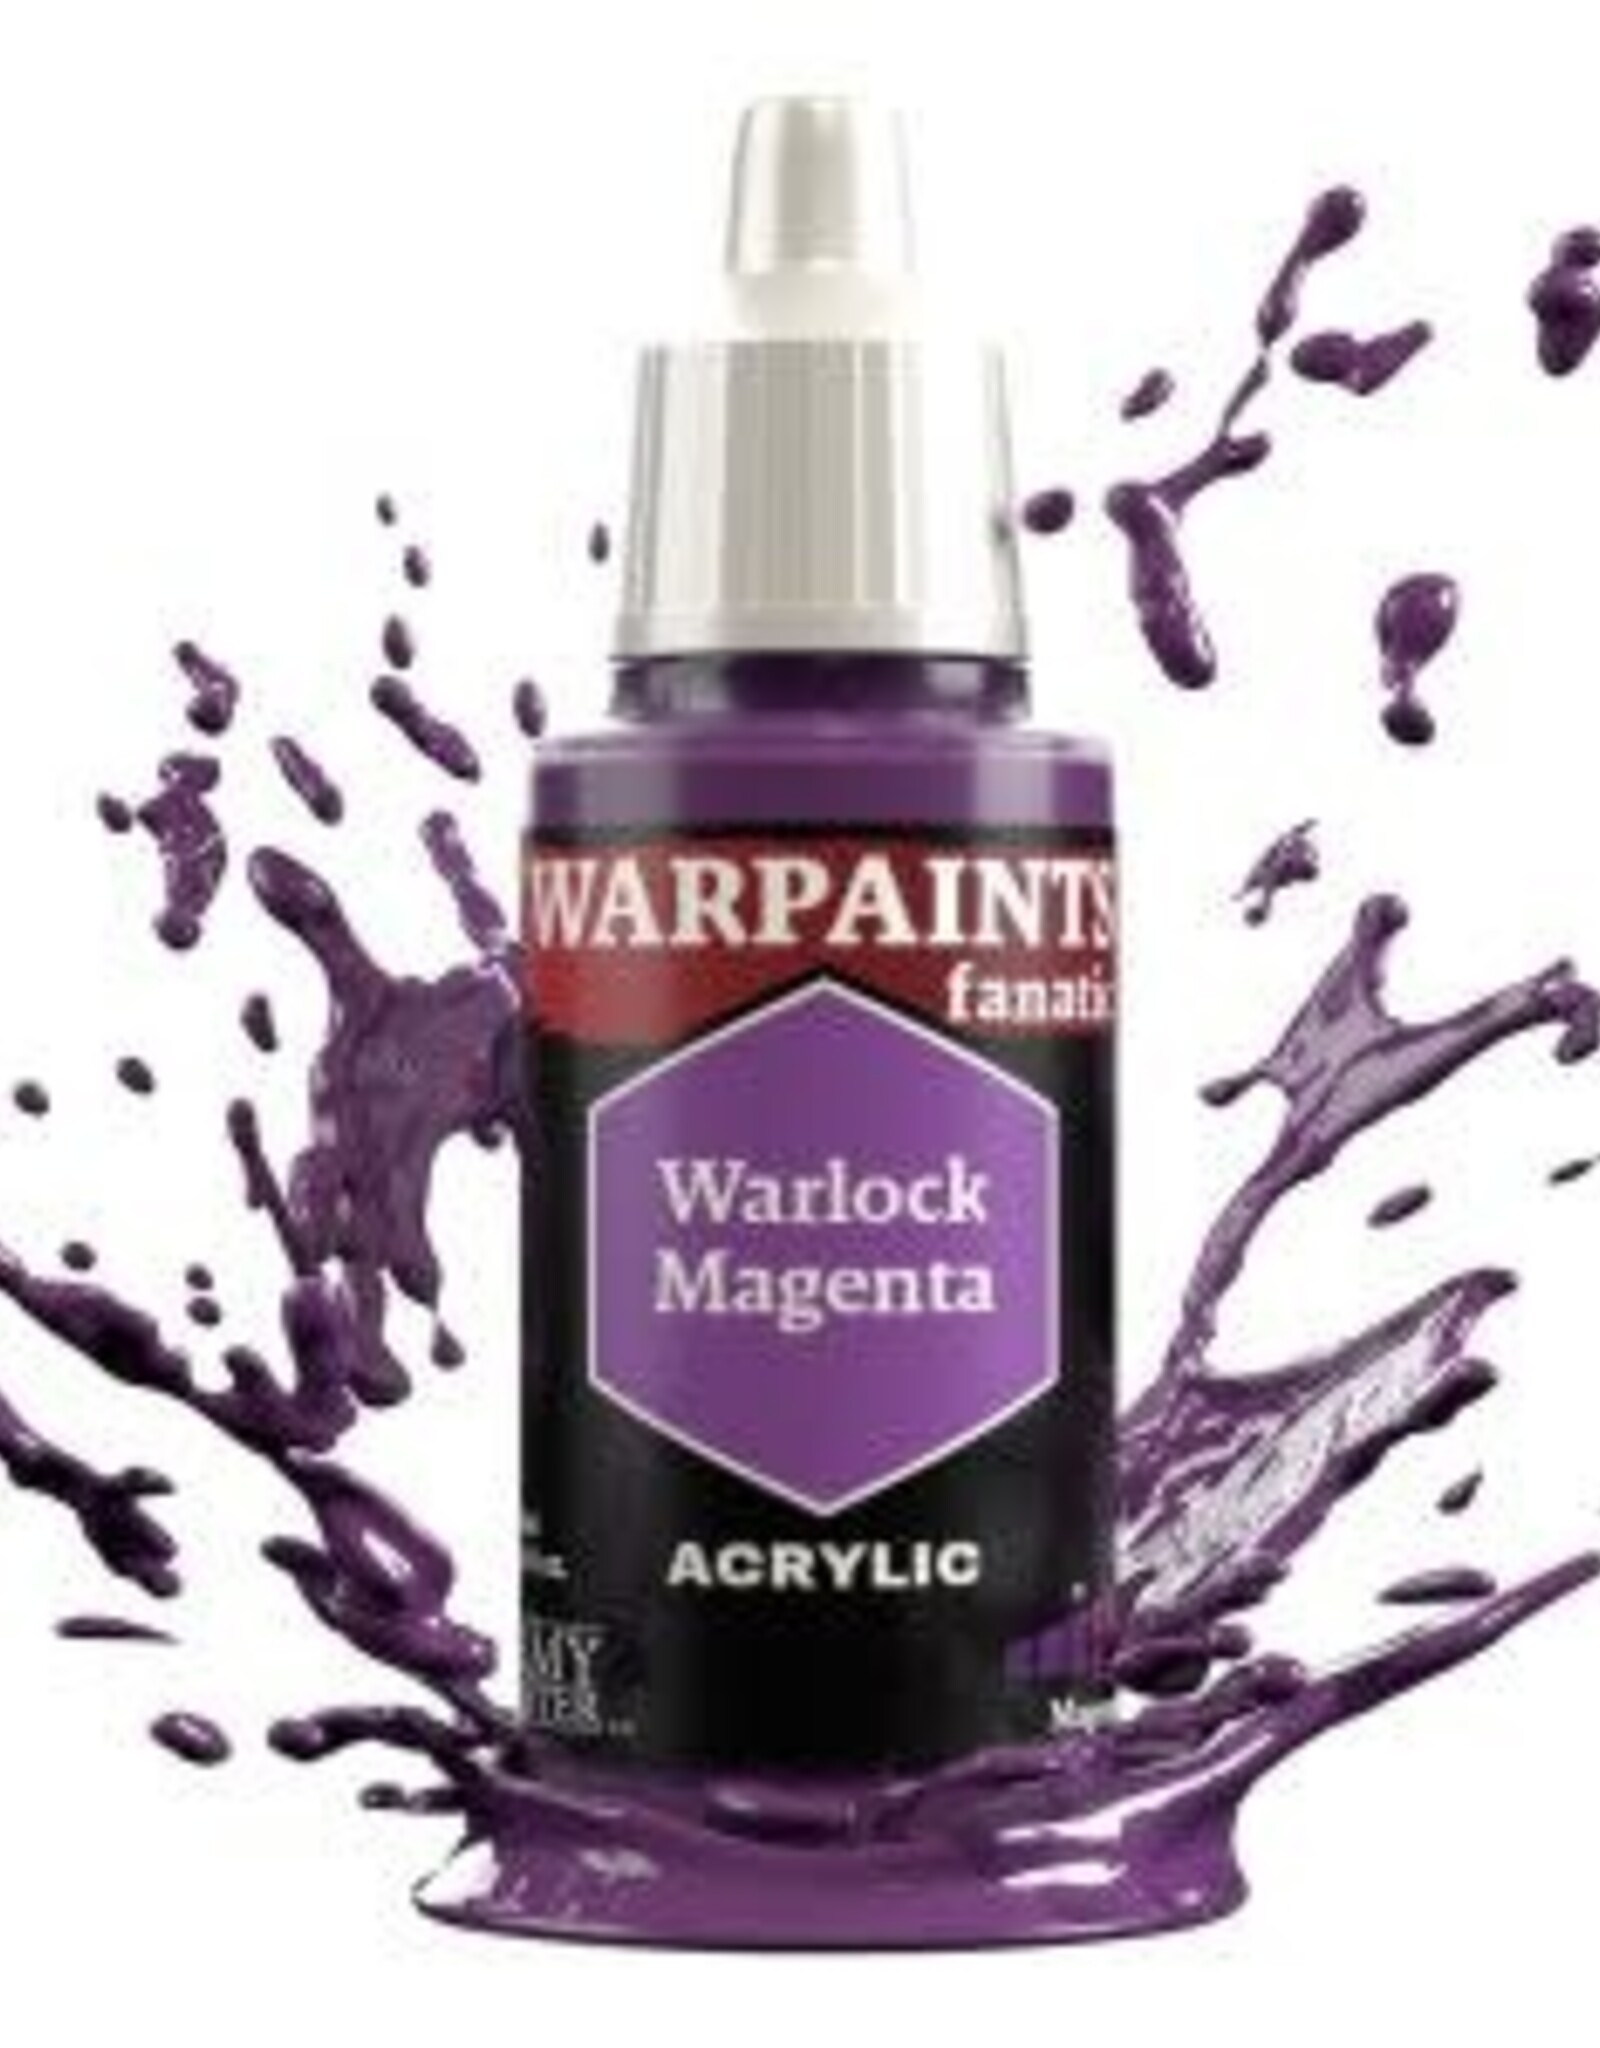 Warpaints Fanatic: Warlock Magenta